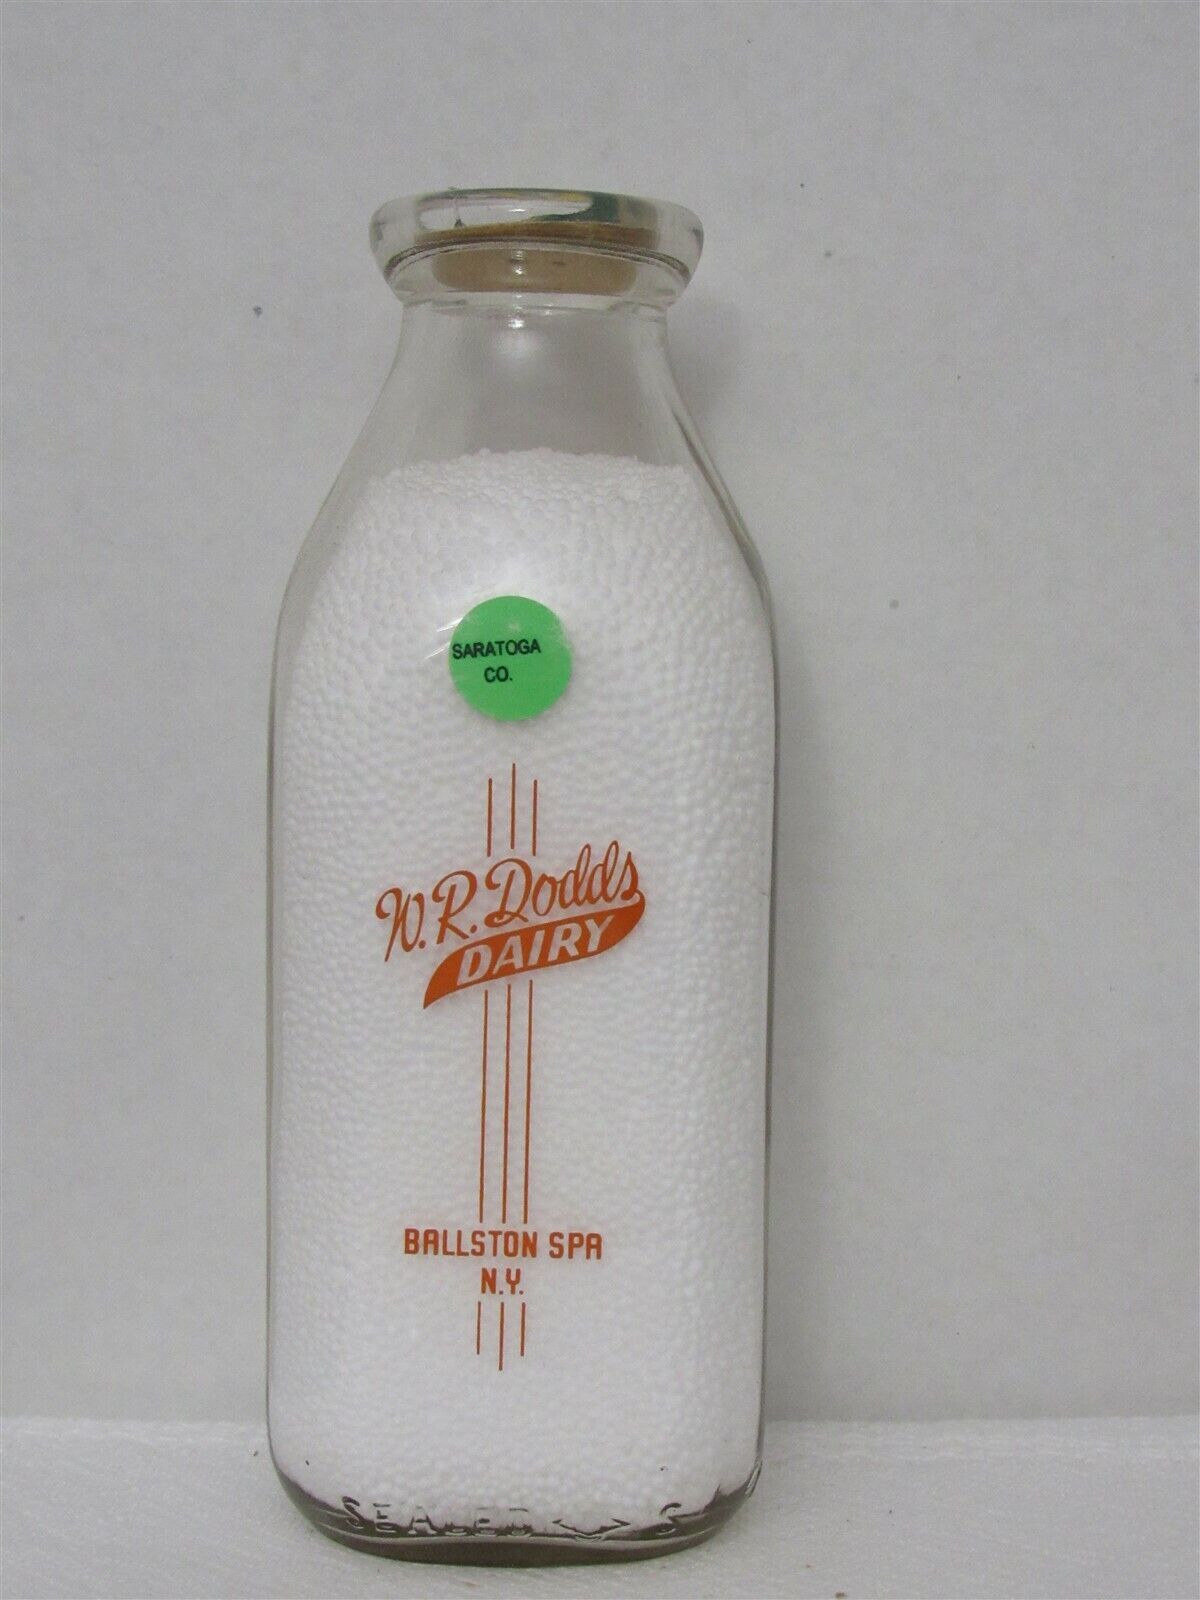 SSPQ Milk Bottle W R Dodds Dairy Ballston Spa NY SARATOGA COUNTY 1954 RARE V#1